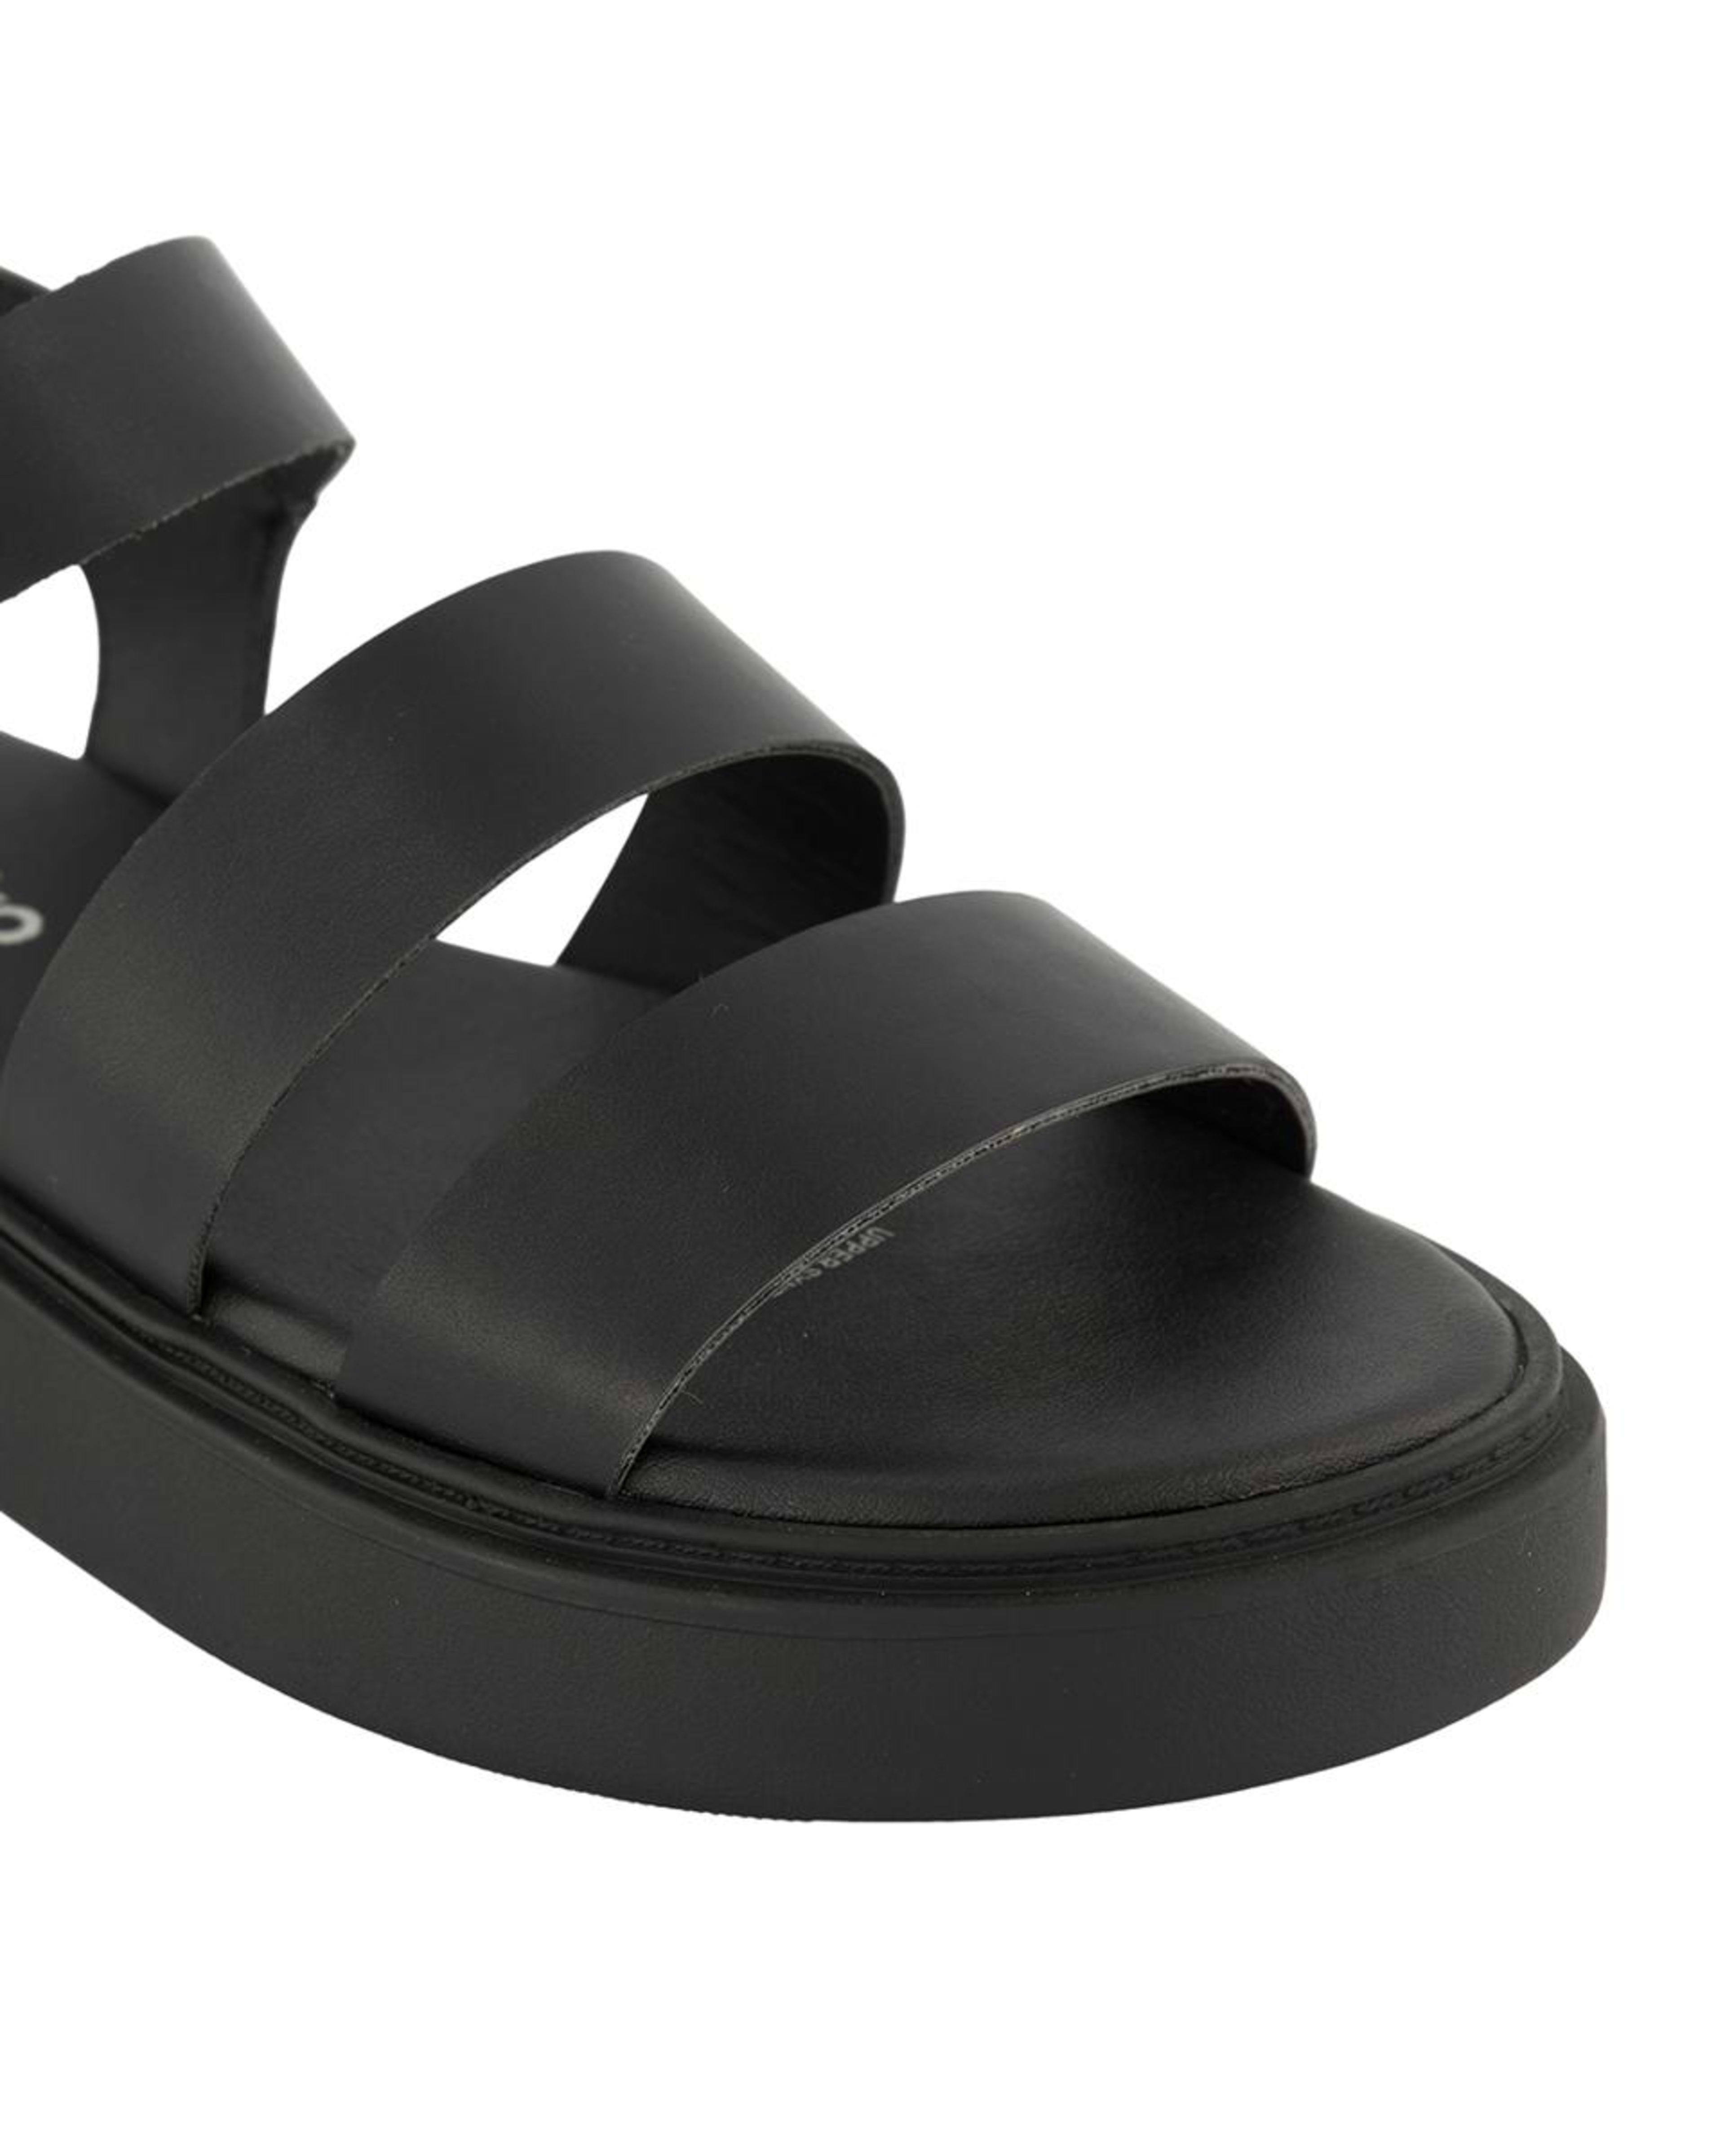 Chunky Fashion Sandals - Kmart